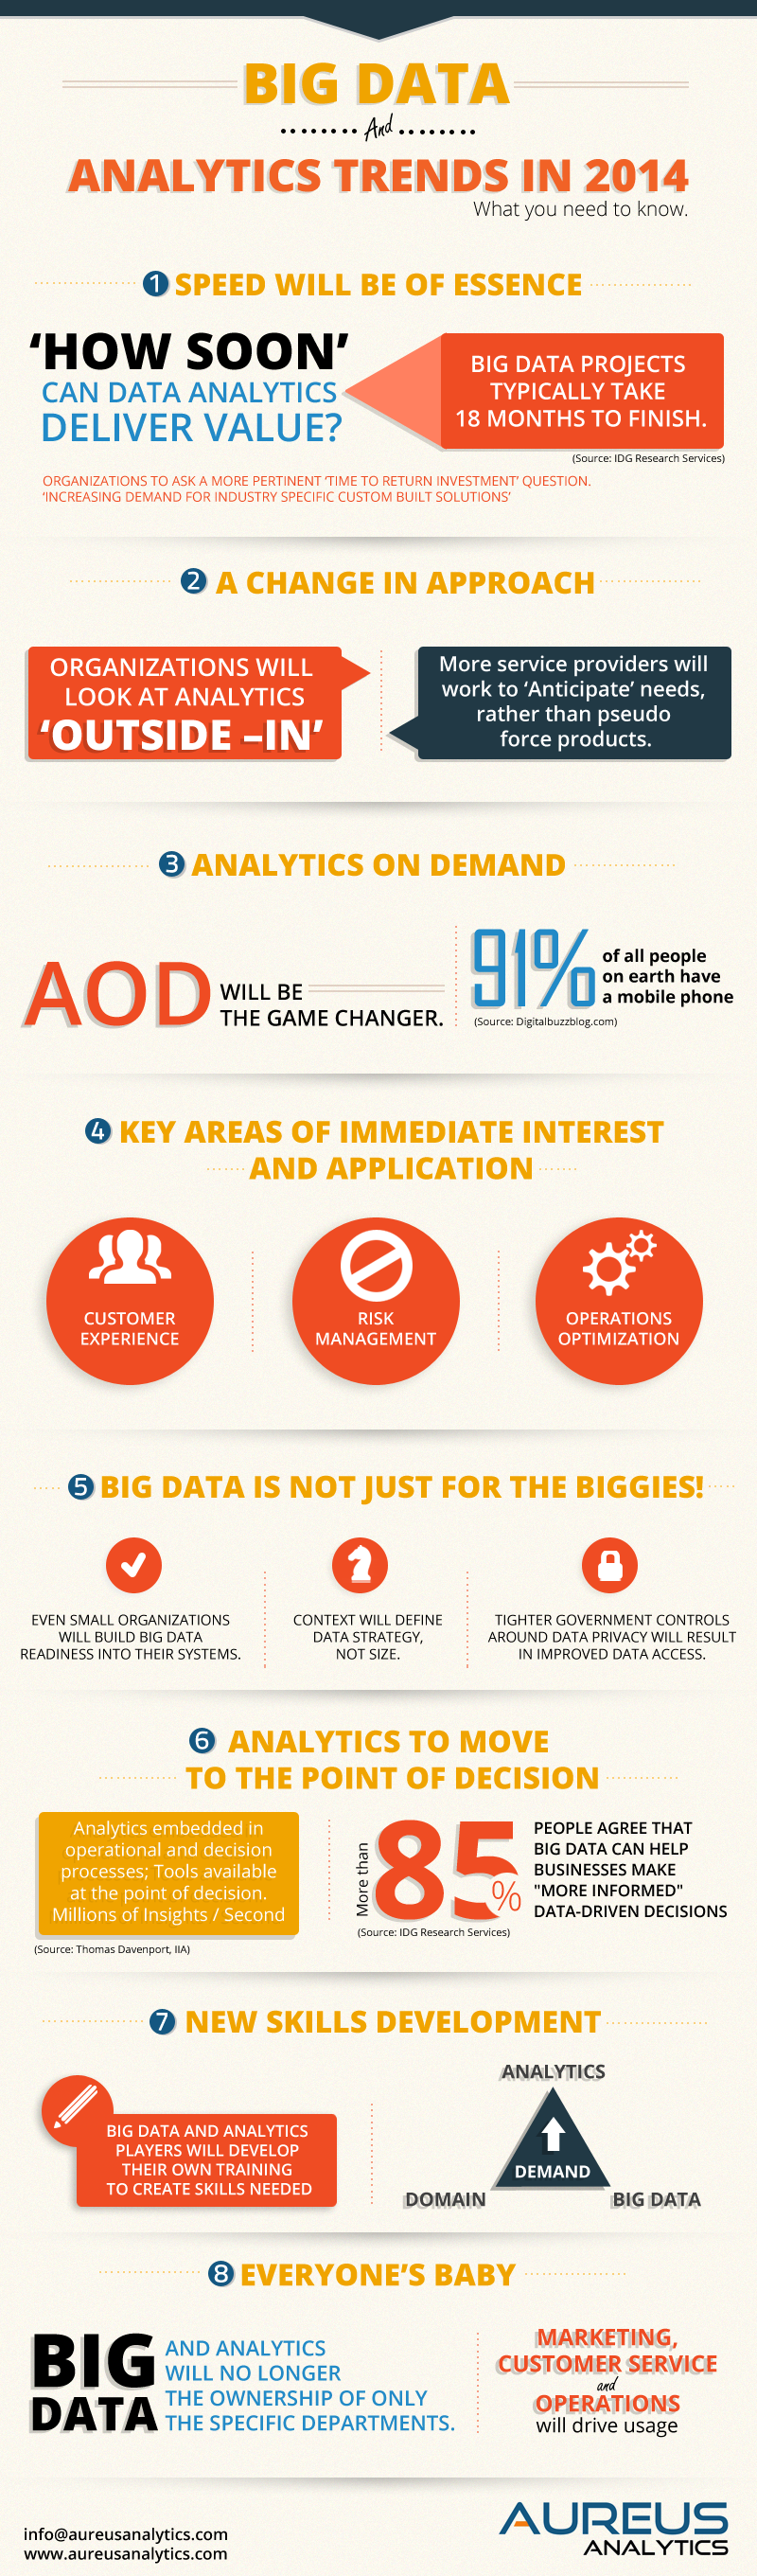 Infographic: Big Data Trends 2014 - DATAVERSITY